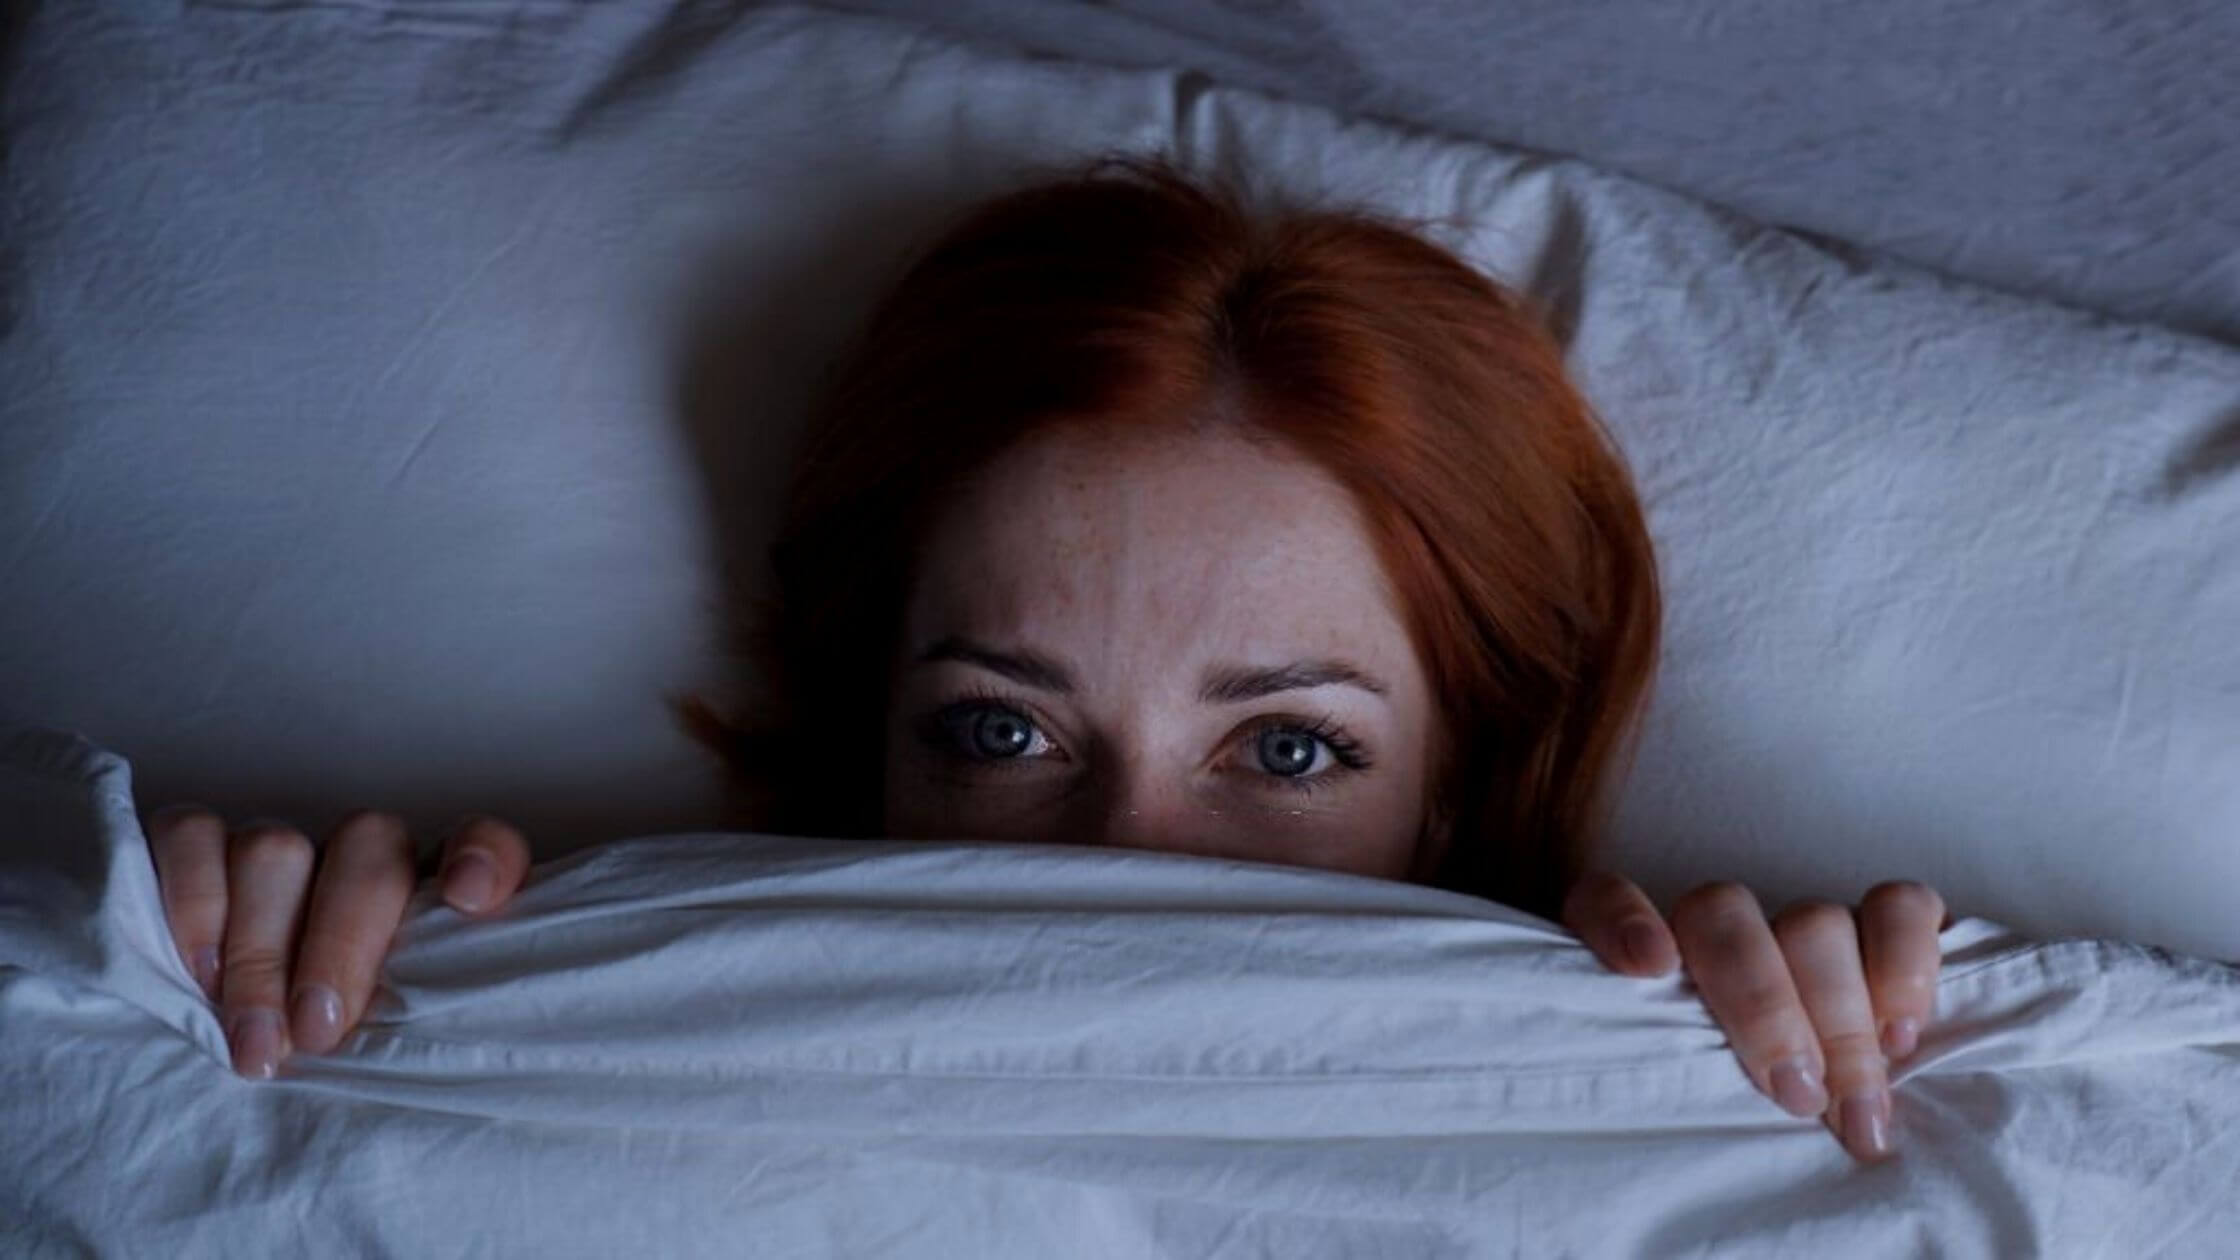 Lack Of Sleep Increases Heart Disease